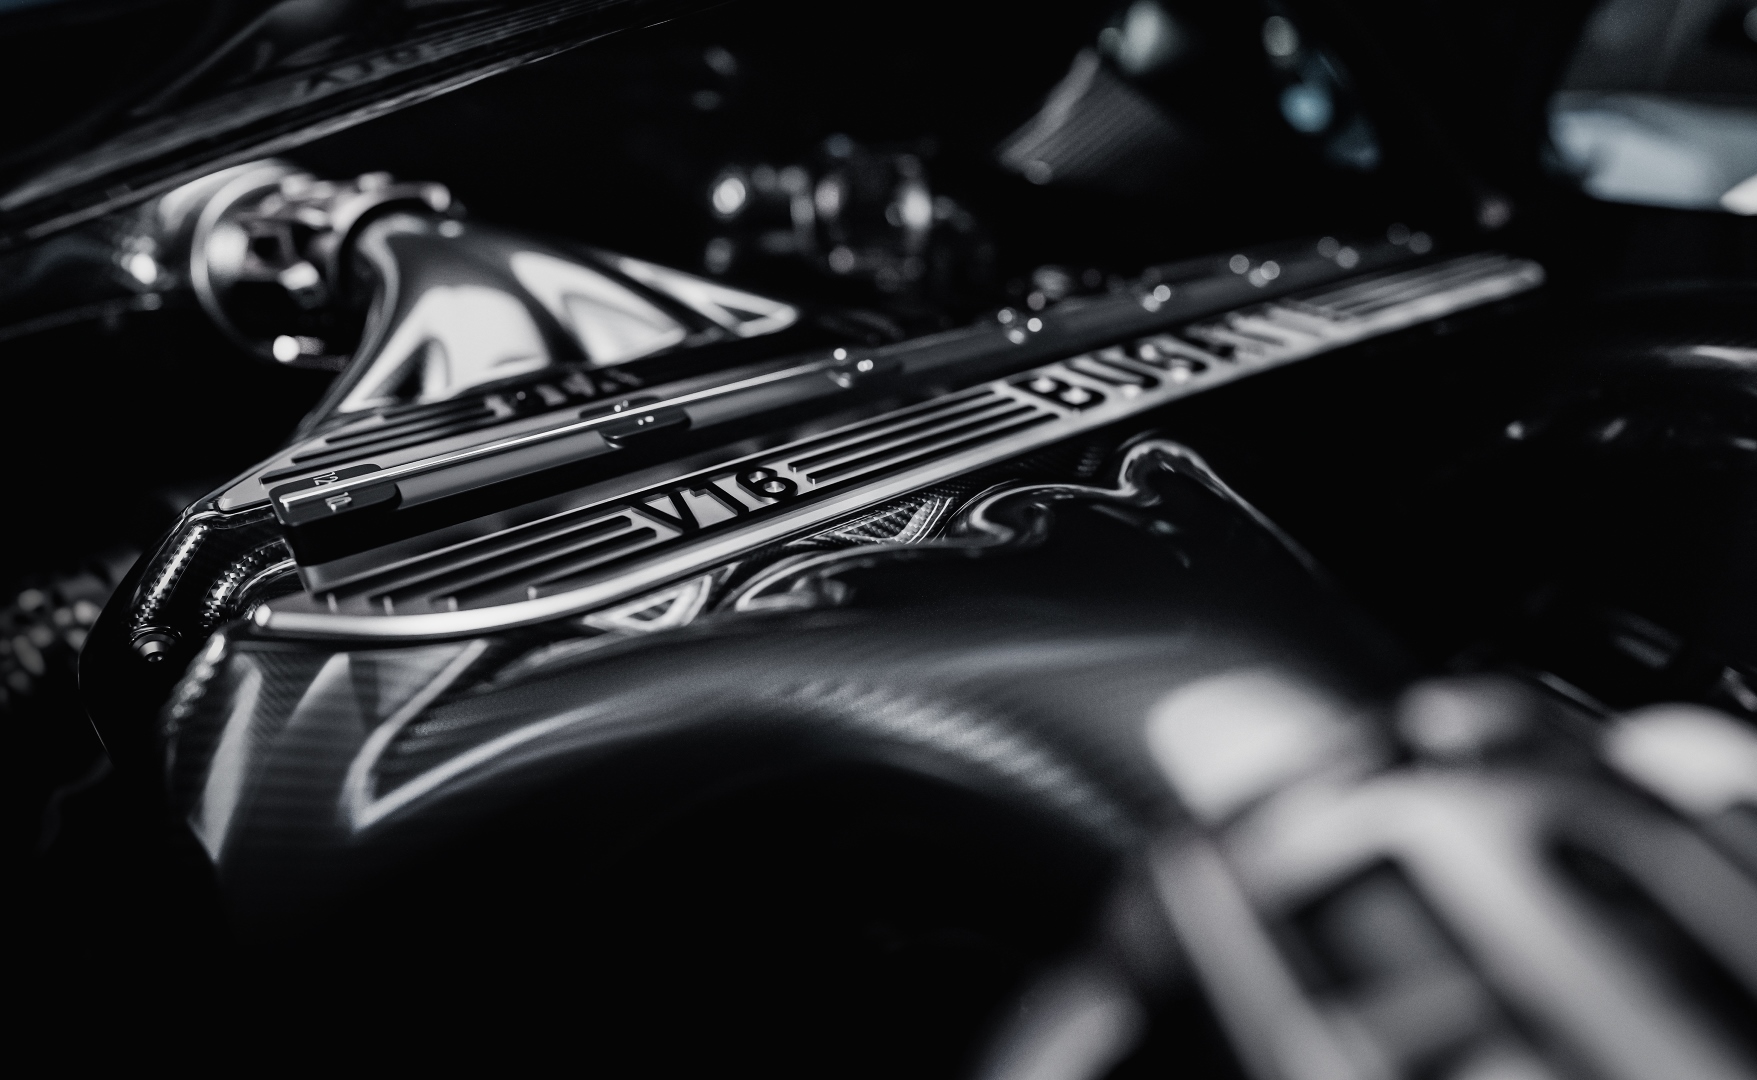 bugatti-world-premiere-presskit-images-15.jpg